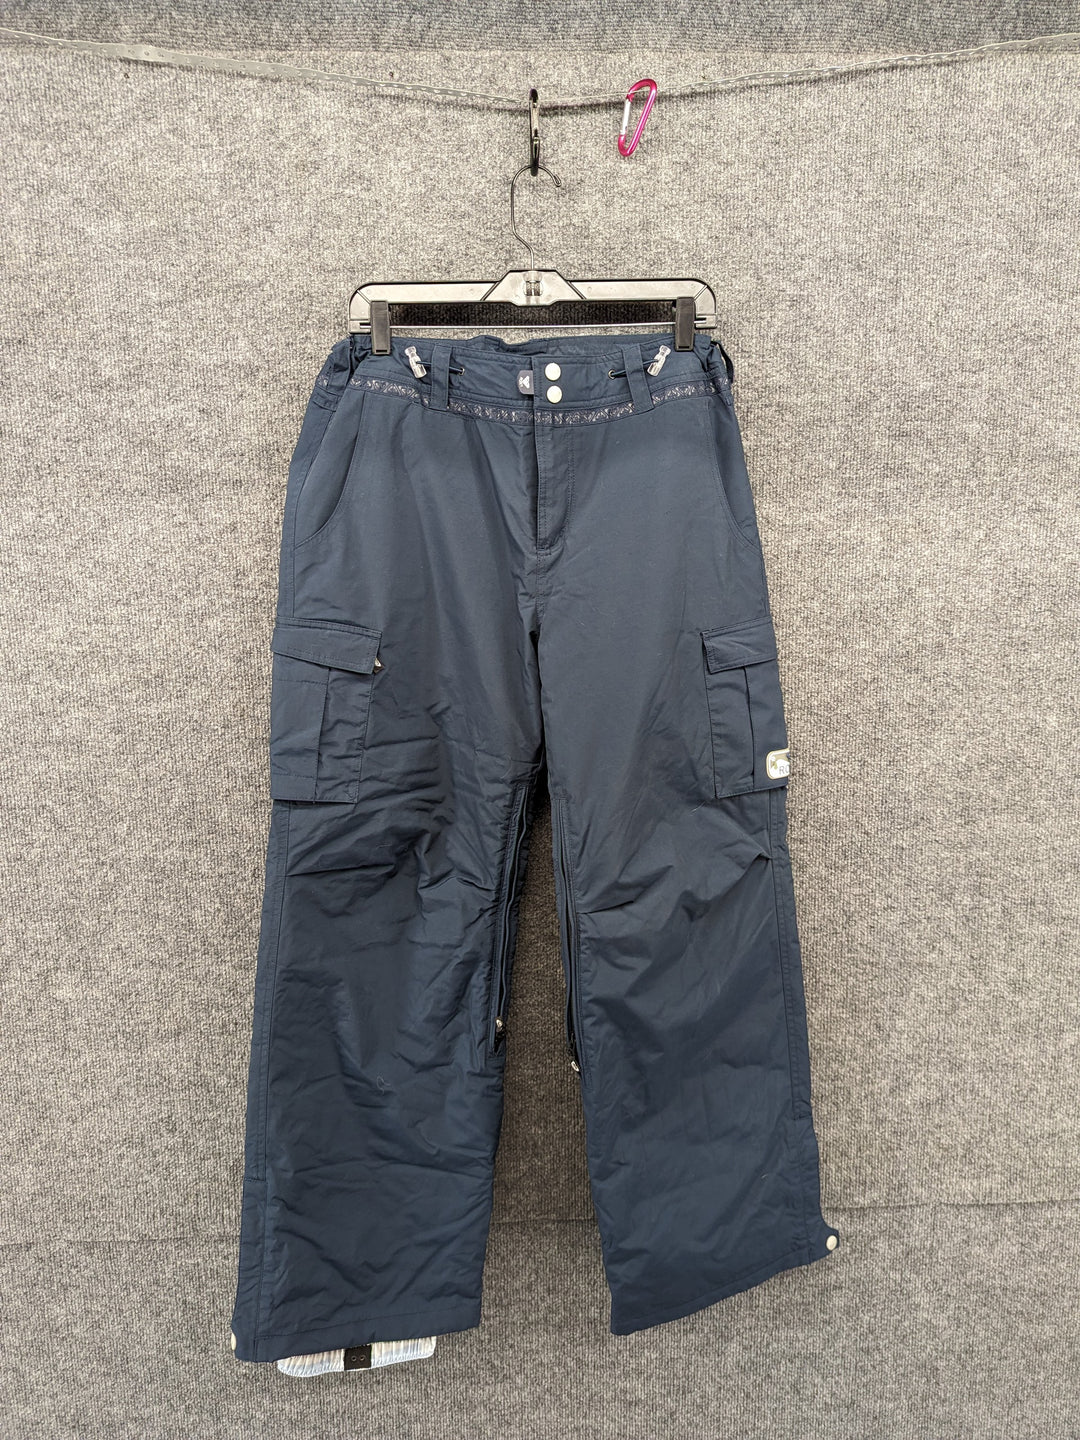 Camii Mia Size W27 Women's Softshell Pants – Rambleraven Gear Trader